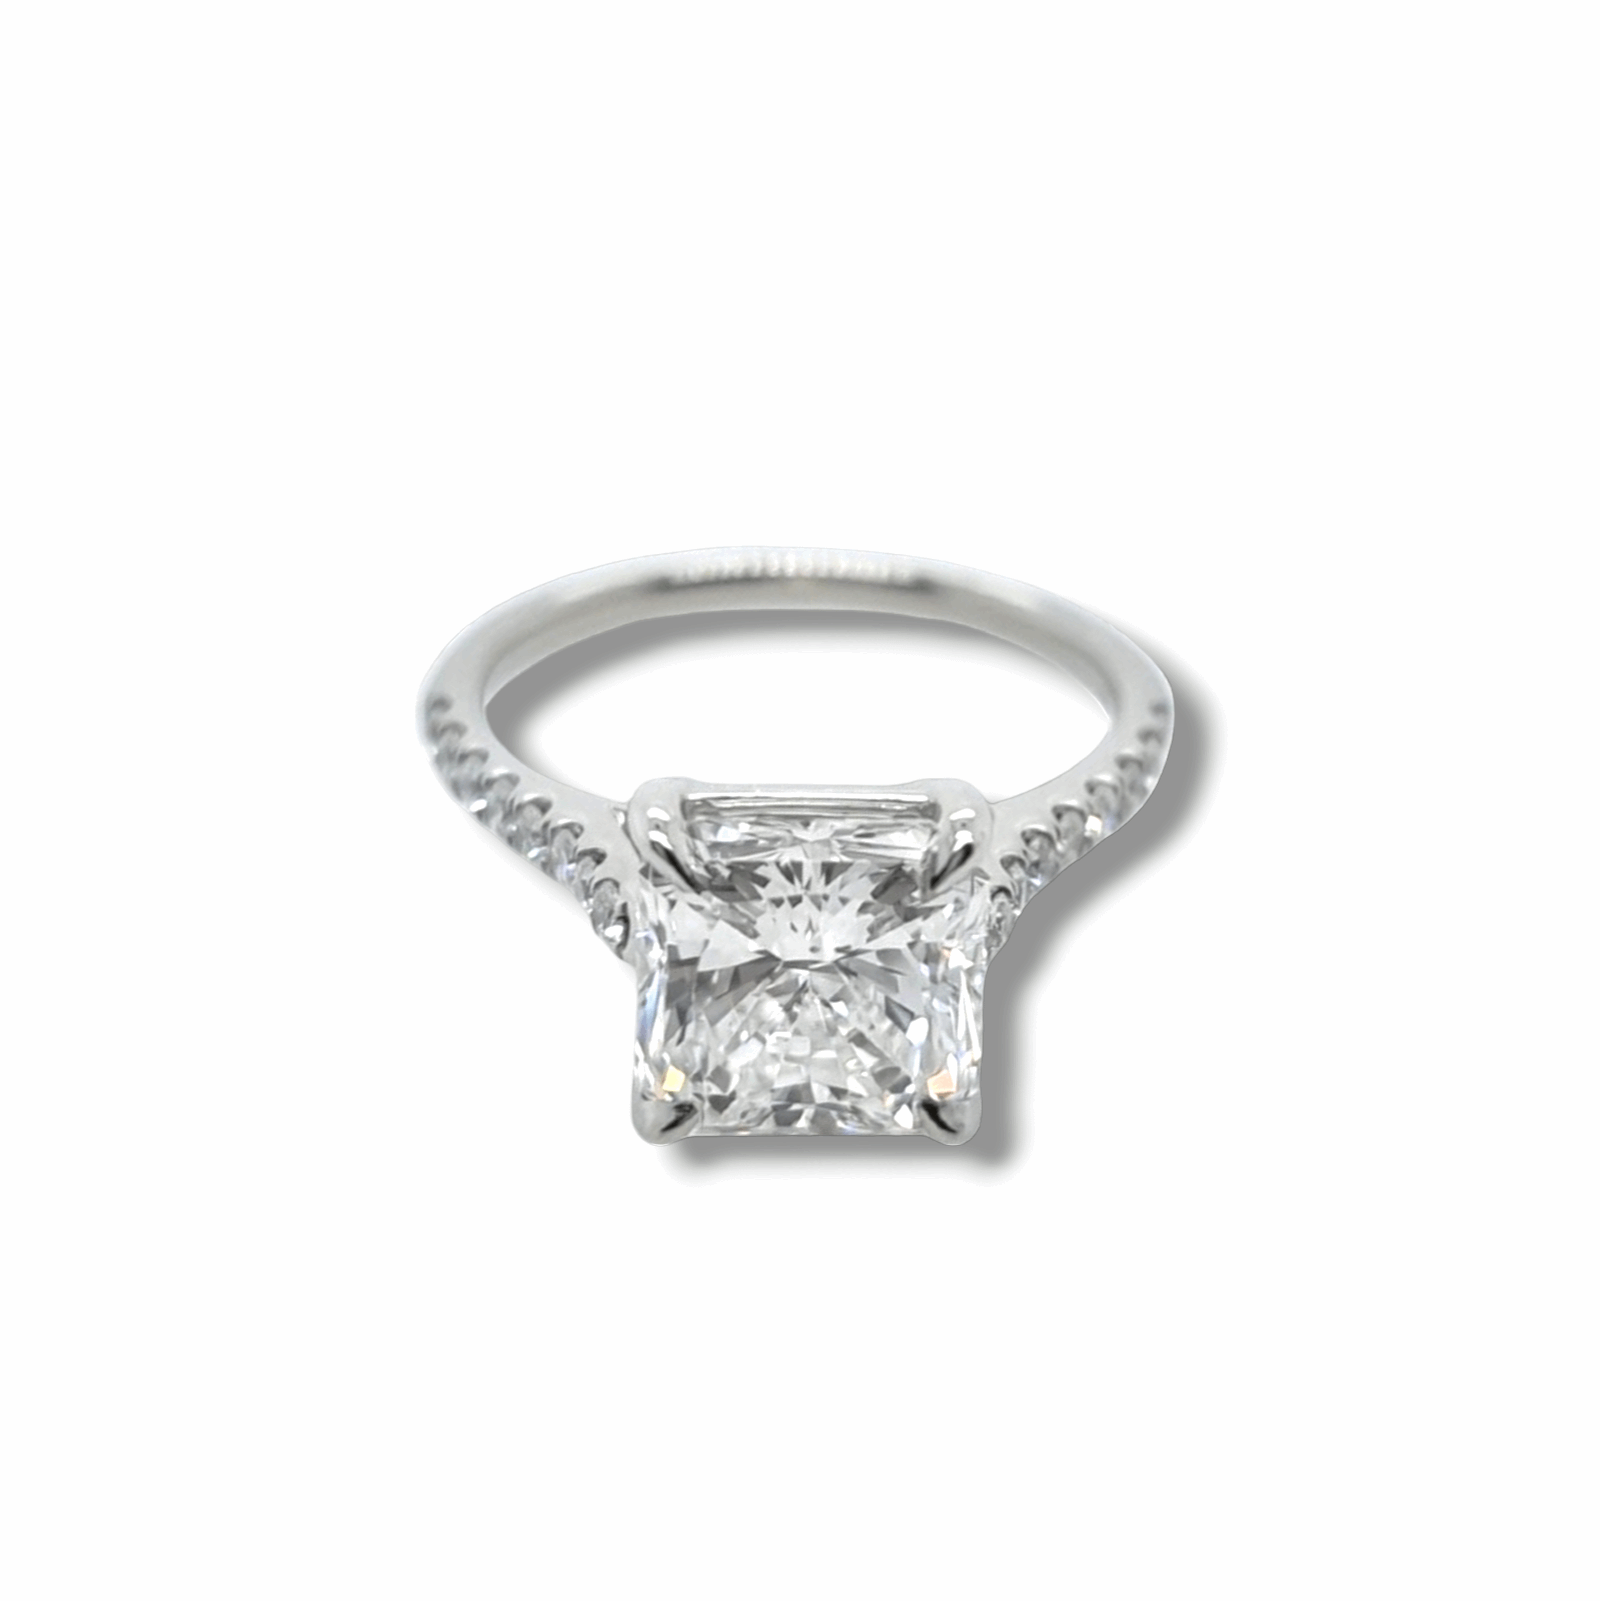 3.03ct Radiant Cut Diamond Ring